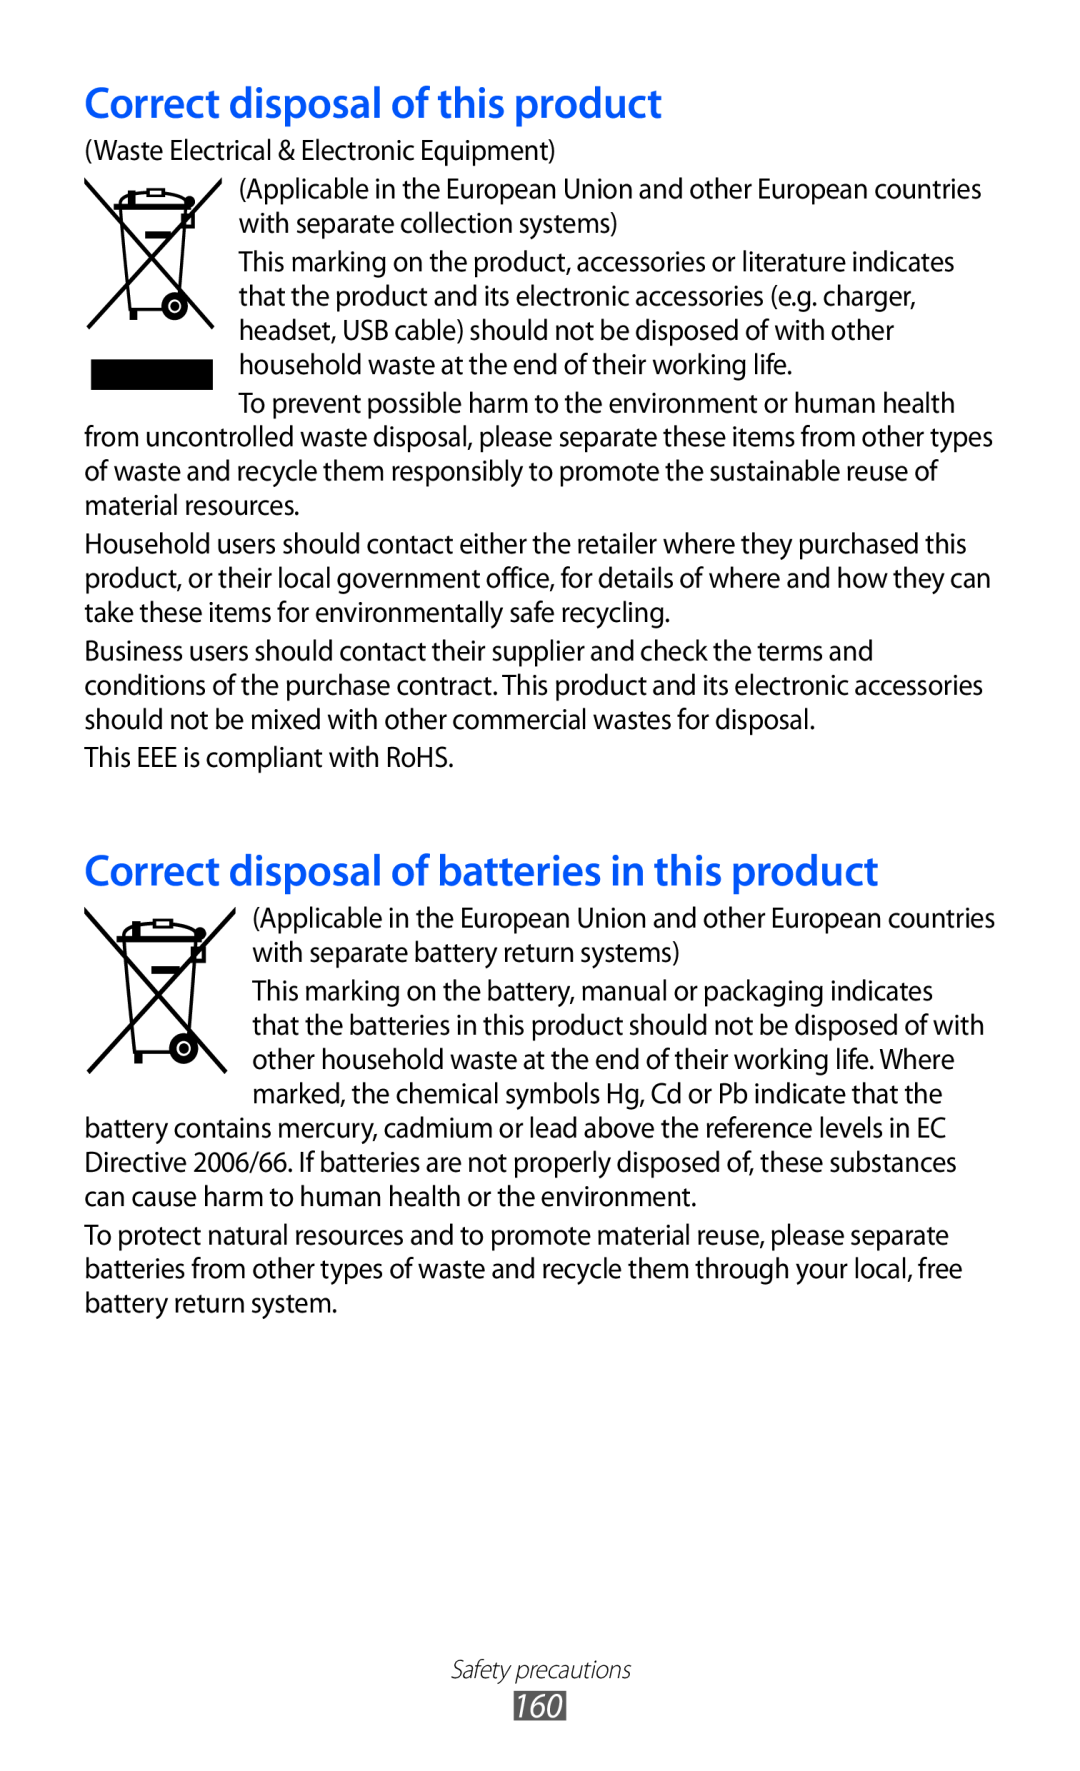 Samsung GT-I9070HKAAFR, GT-I9070RWAJED Correct disposal of this product, Correct disposal of batteries in this product 